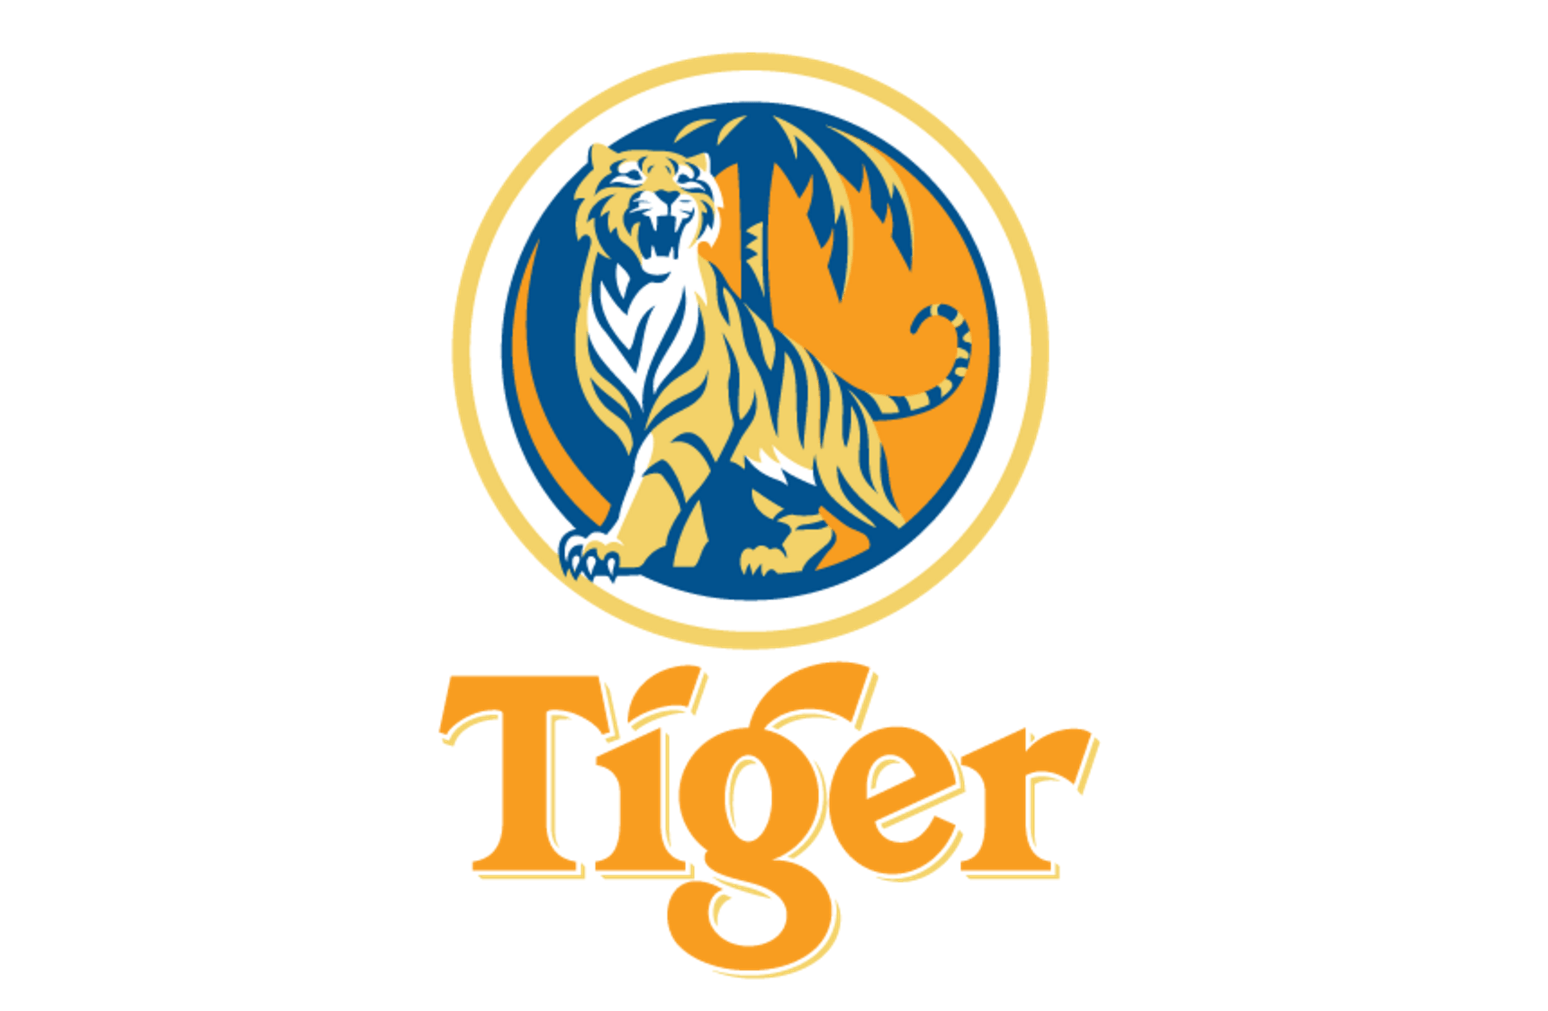 Draught Beer Logo - Download Tiger Beer vector logo (.EPS + .AI) free - Seeklogo.net